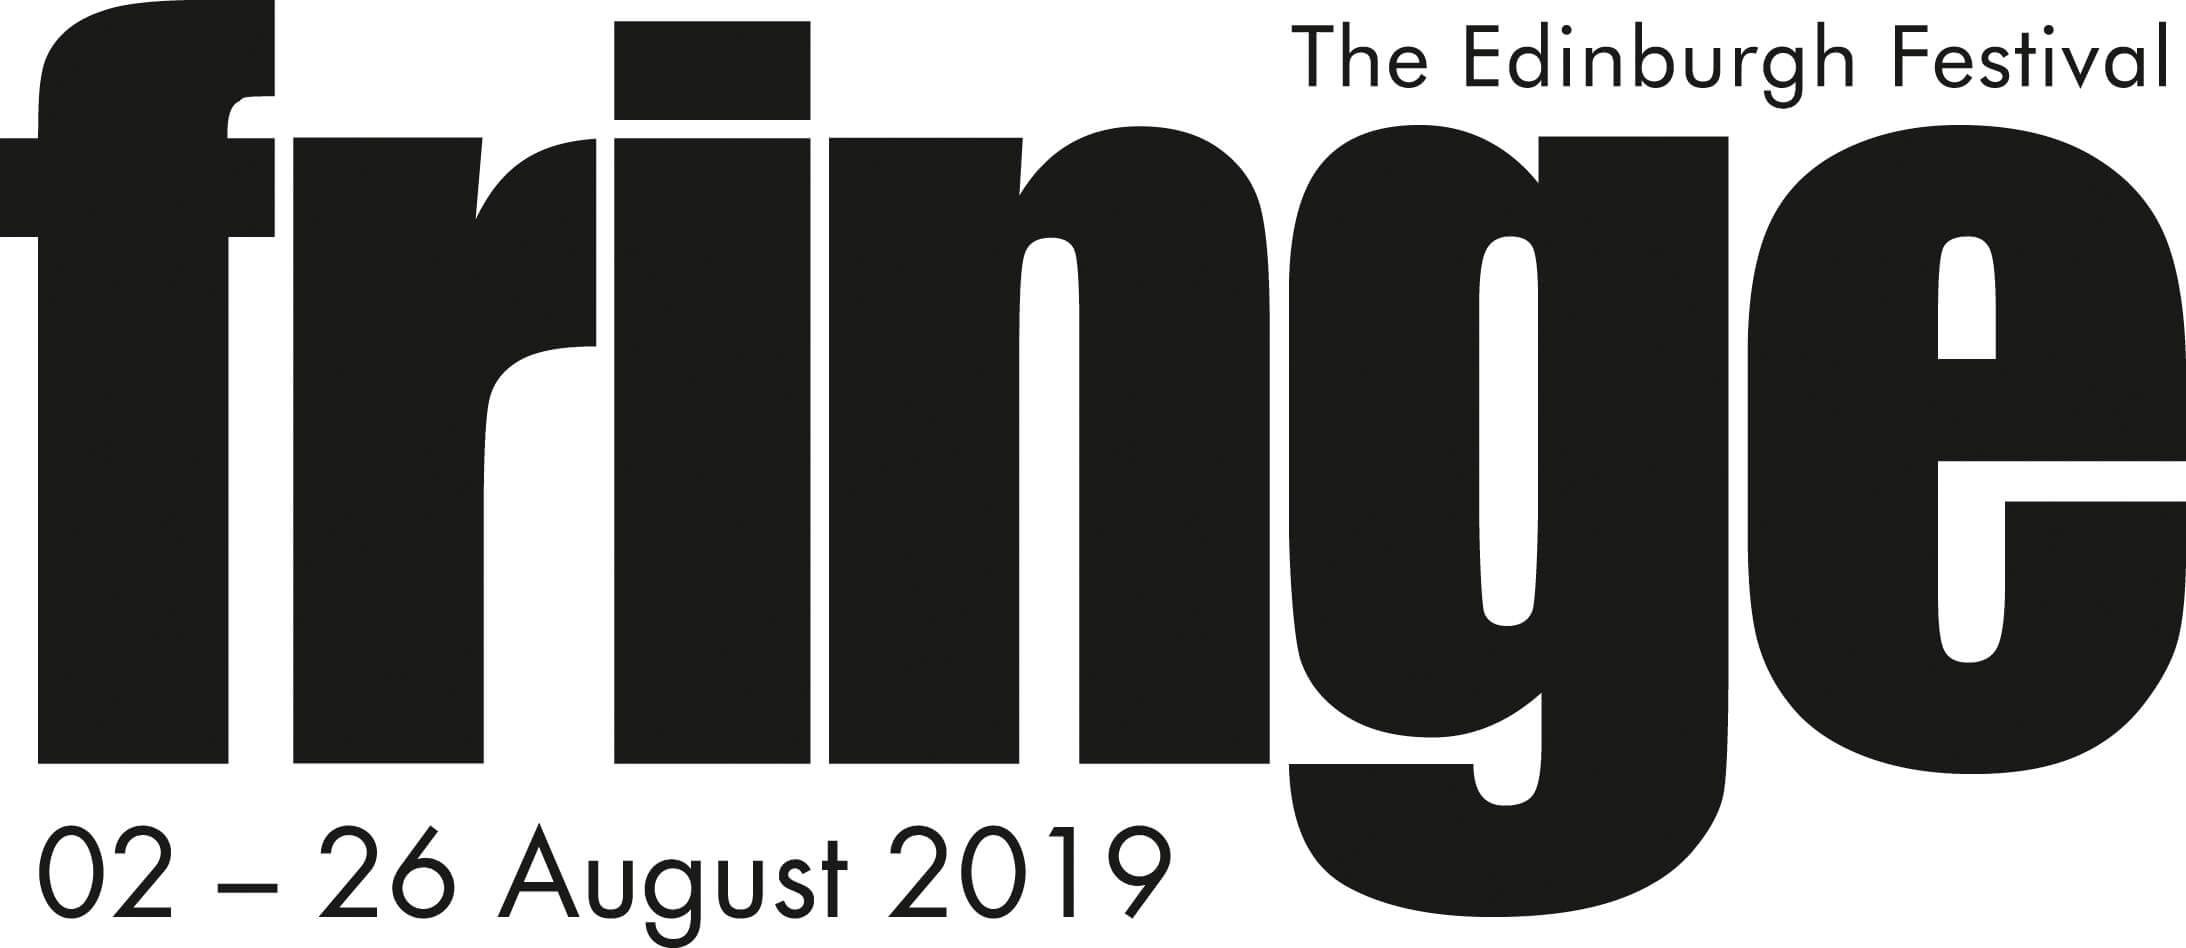 Edinburgh Festival Fringe 2019 Picks - STARBURST Magazine2186 x 948